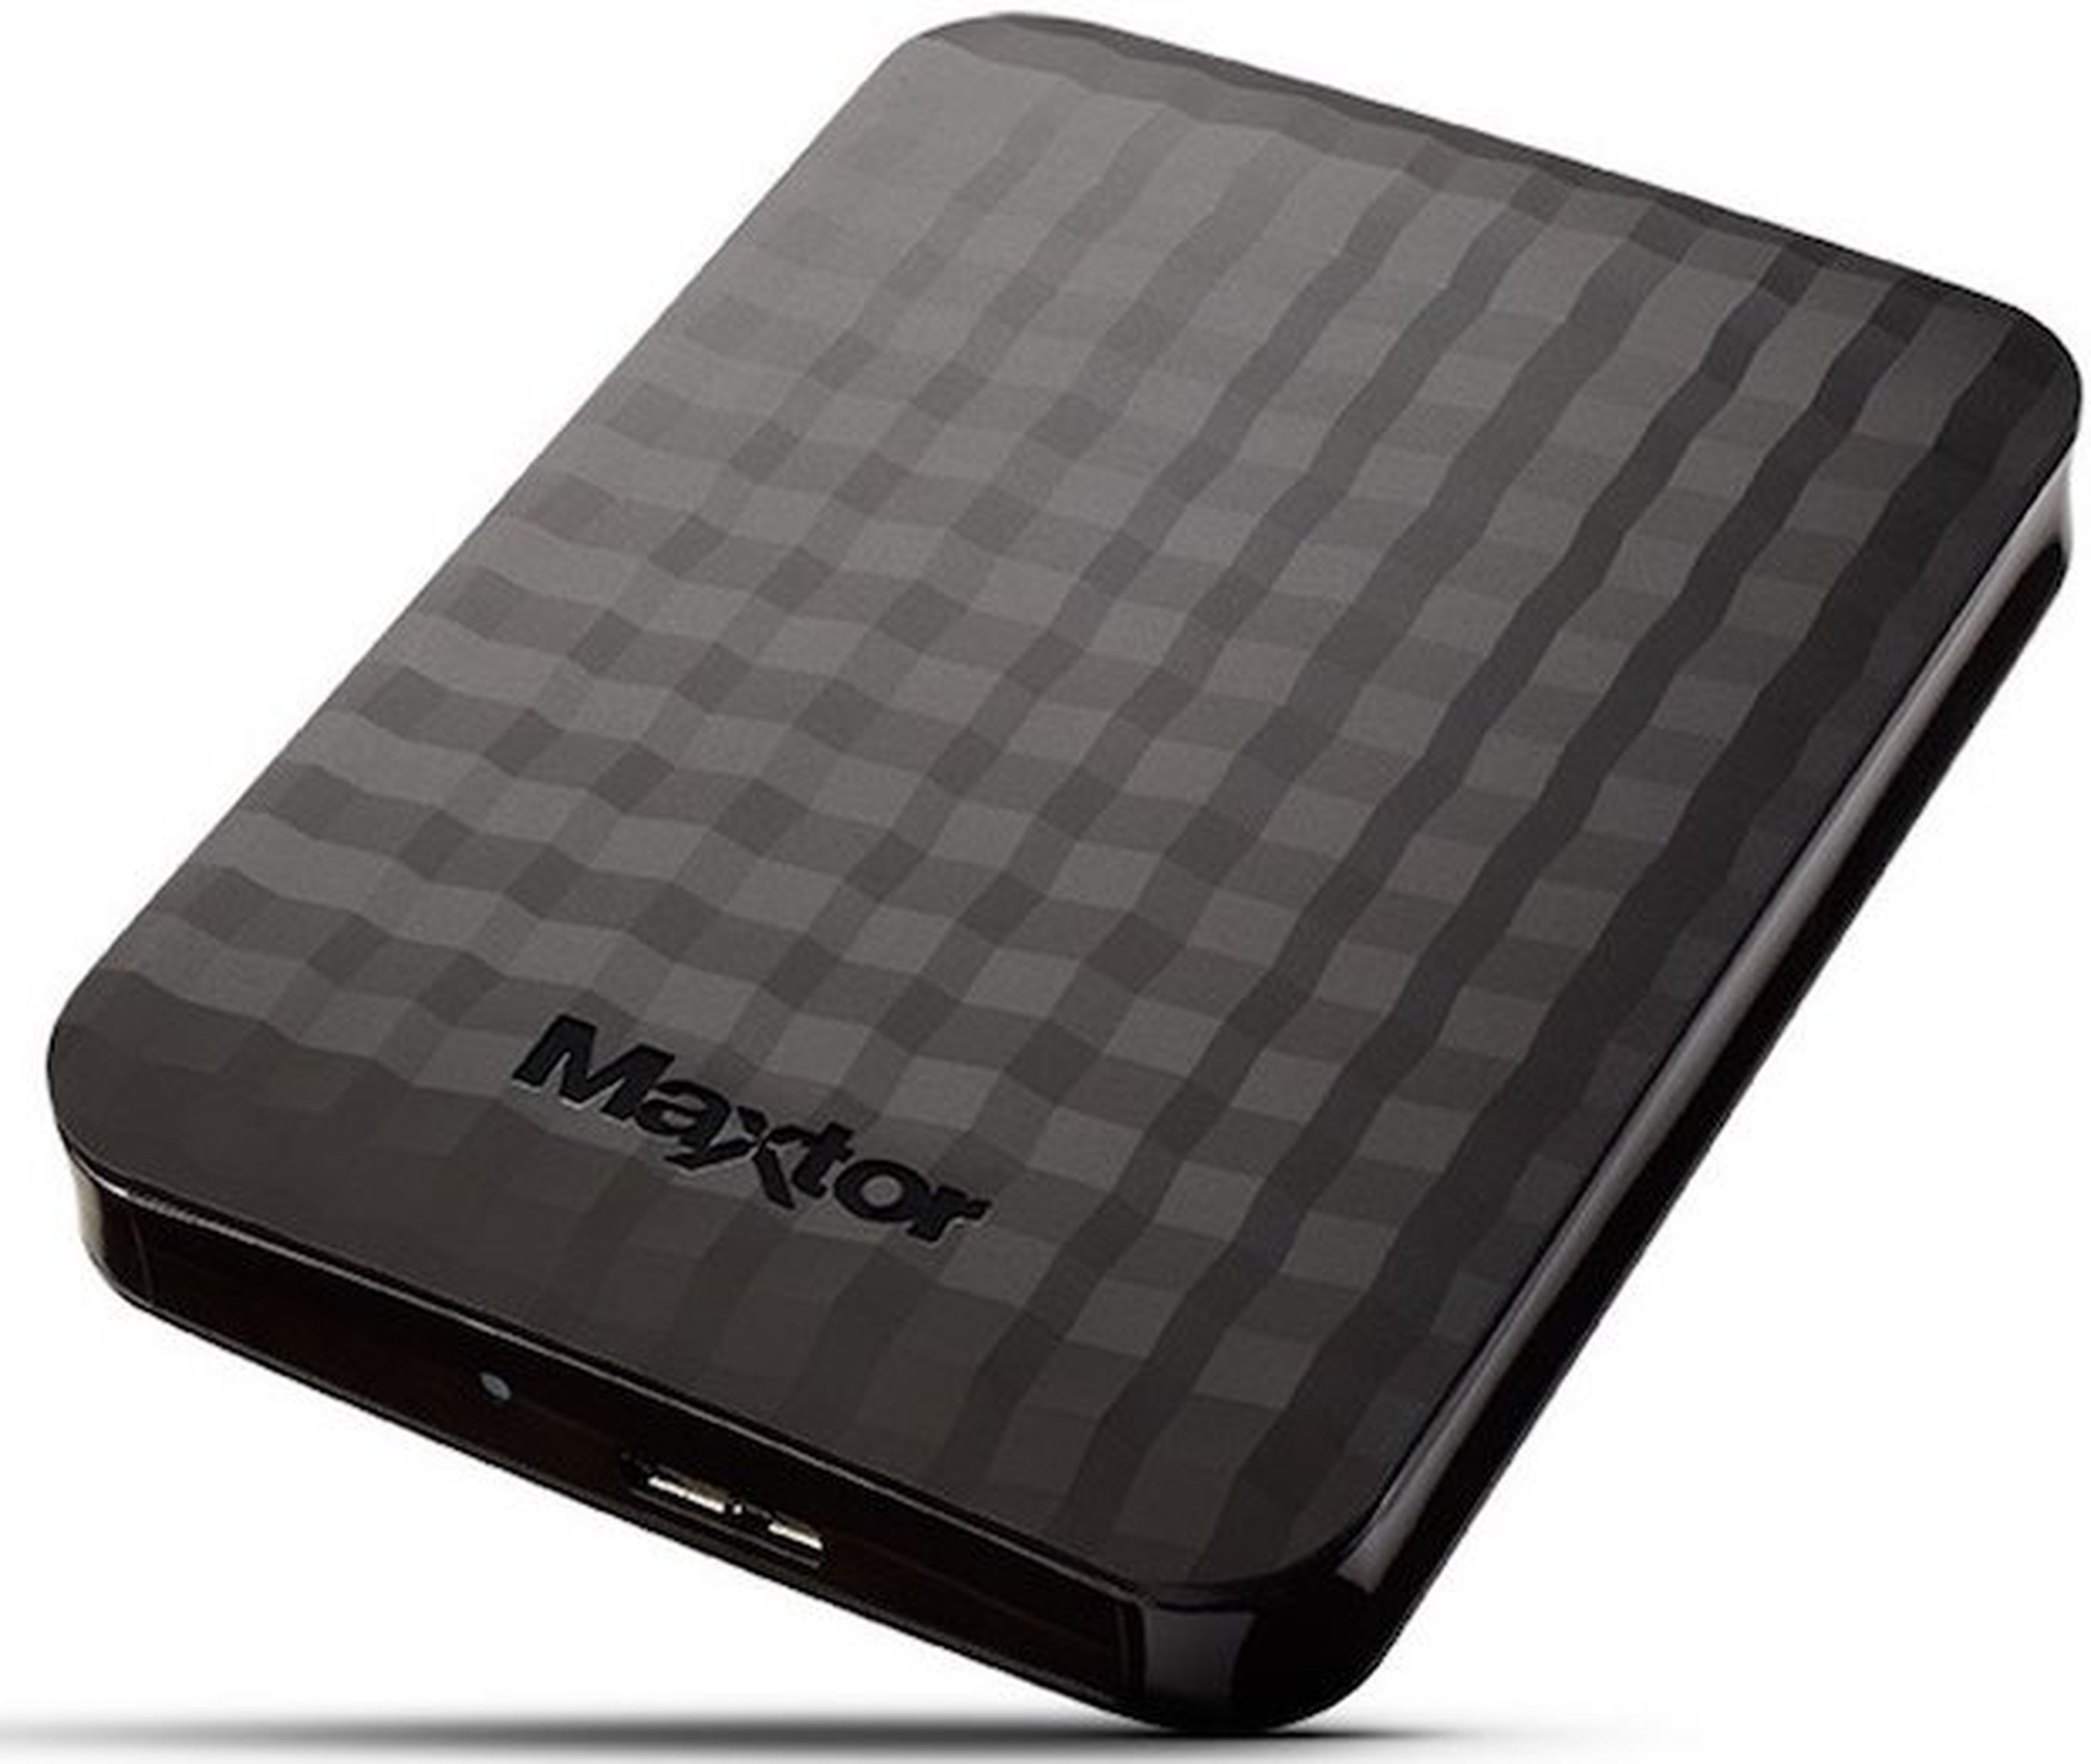 Disco duro externo Maxtor 4 TB